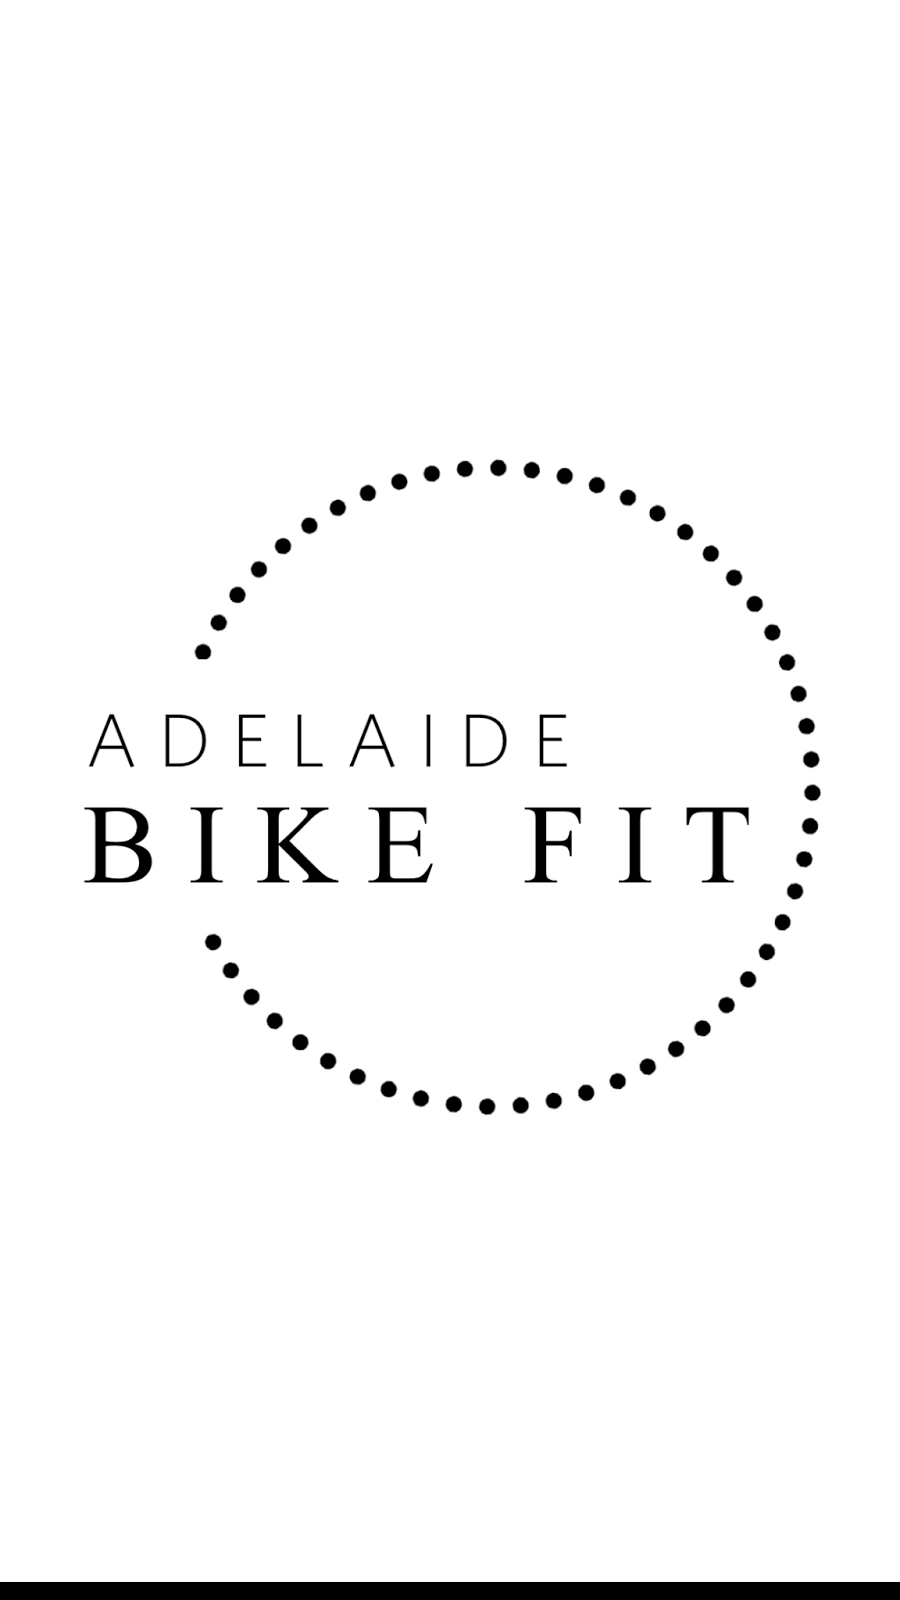 Adelaide Bike Fit | bicycle store | 12 Koowarra Terrace, Largs North SA 5016, Australia | 0433462886 OR +61 433 462 886